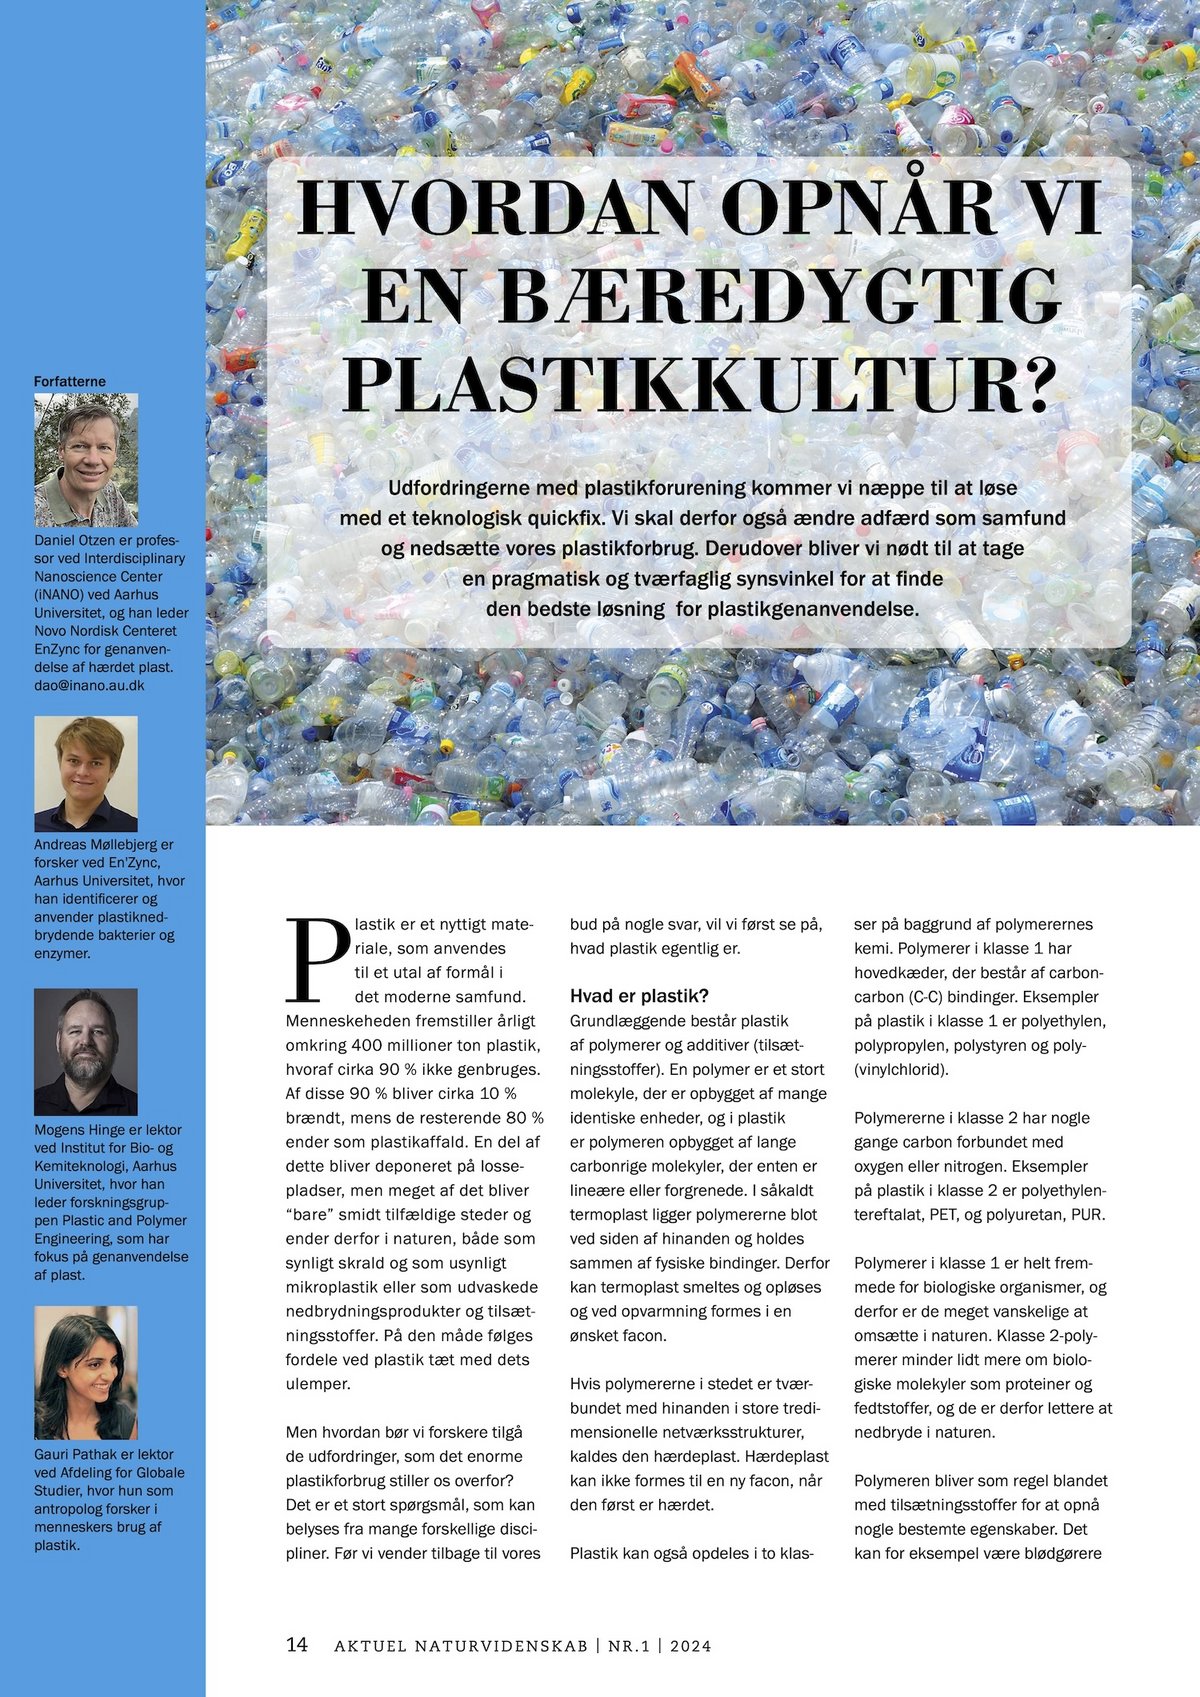 Hvordan opnår vi en bæredygtig plastikkultur?